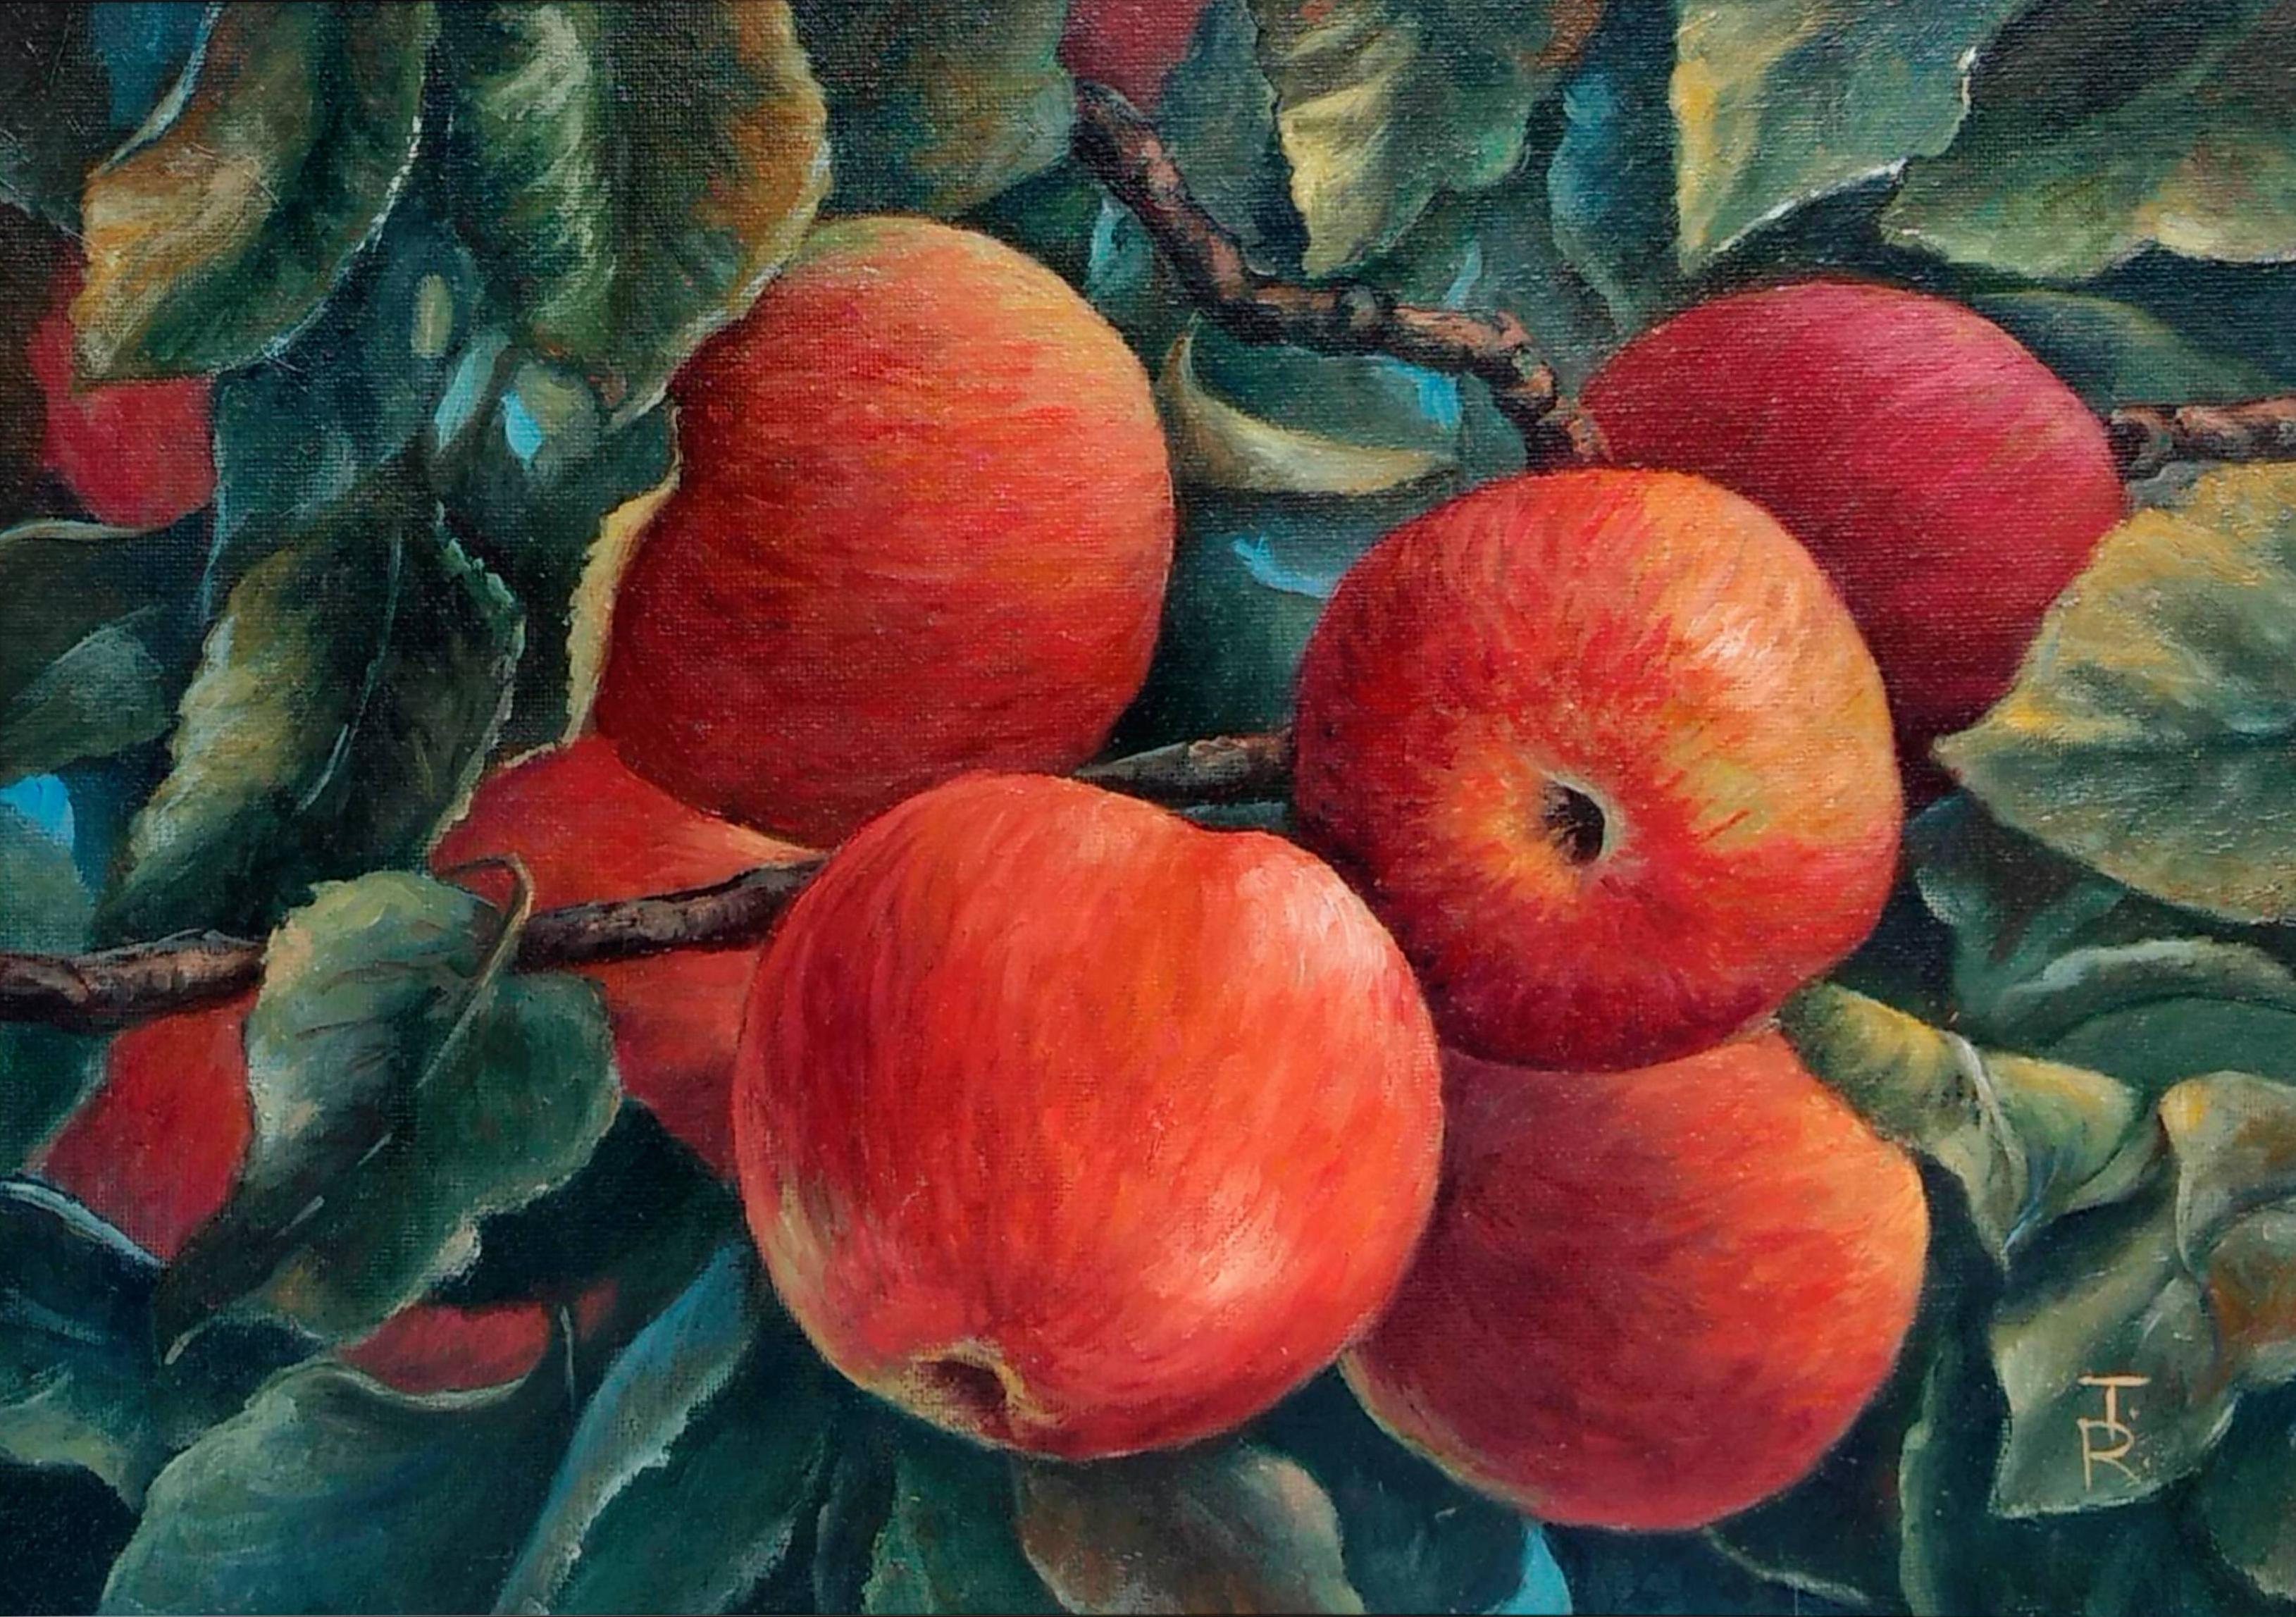 Abundance Apple Tree Still Life.Oil painting on canvas panel